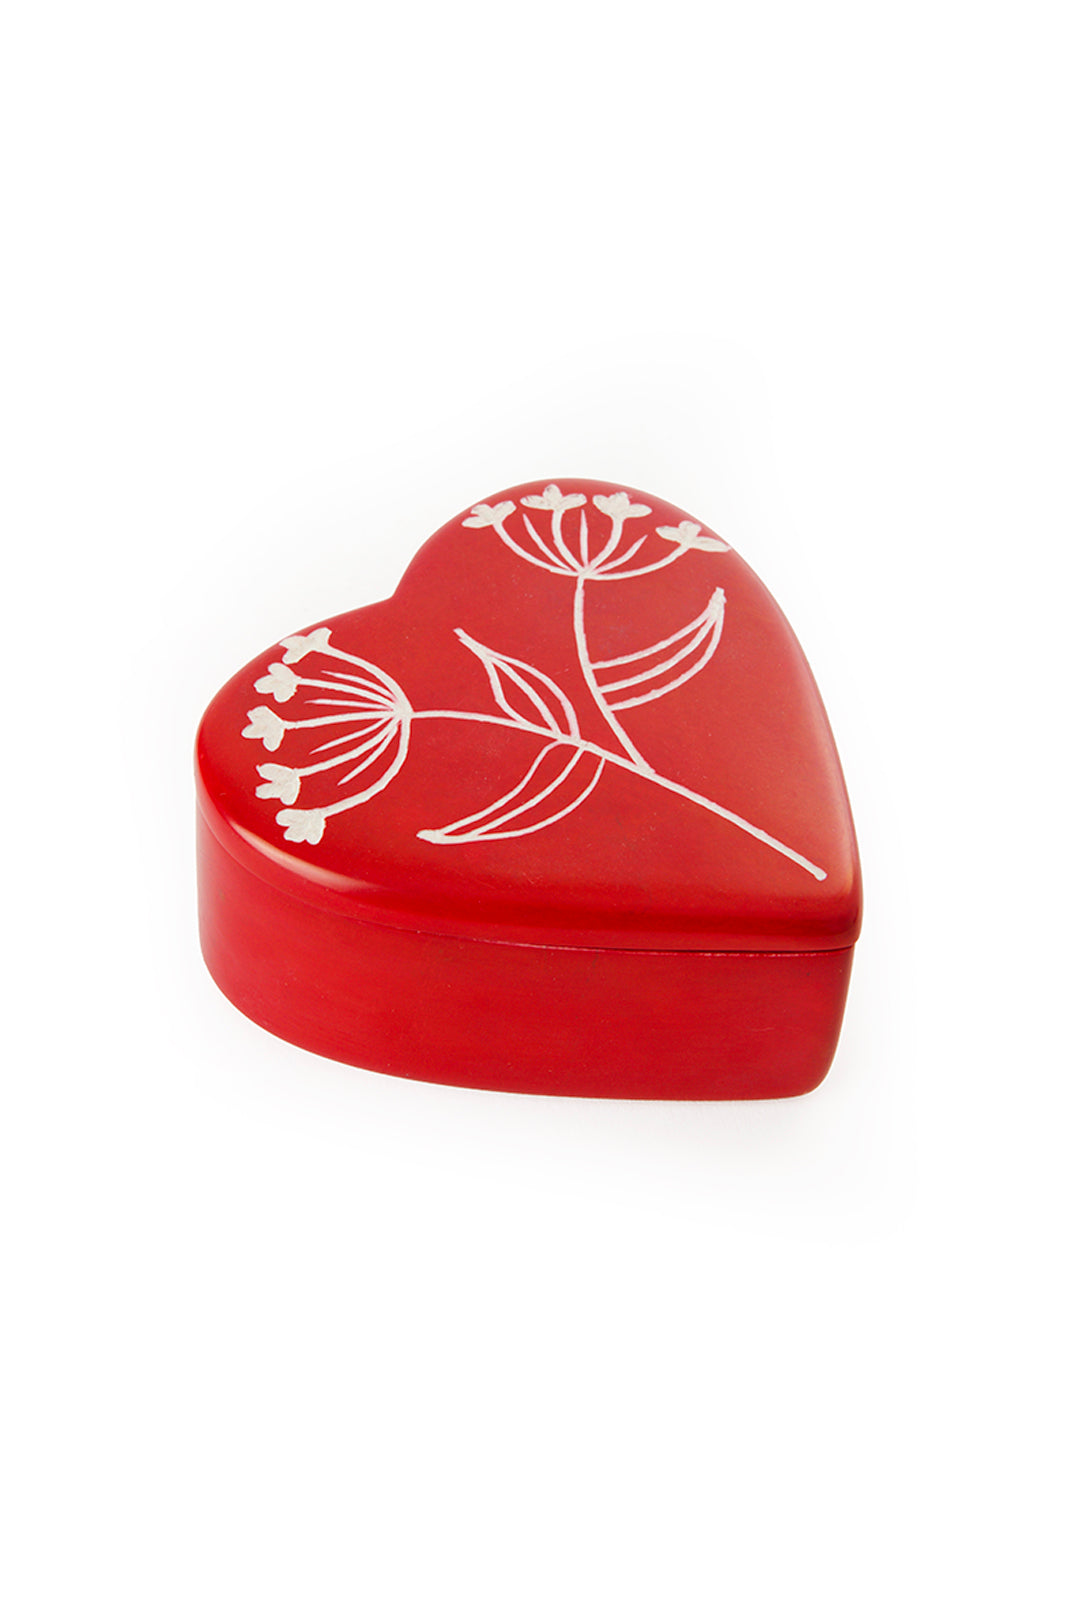 Ammi Flower Red Soapstone Heart Box